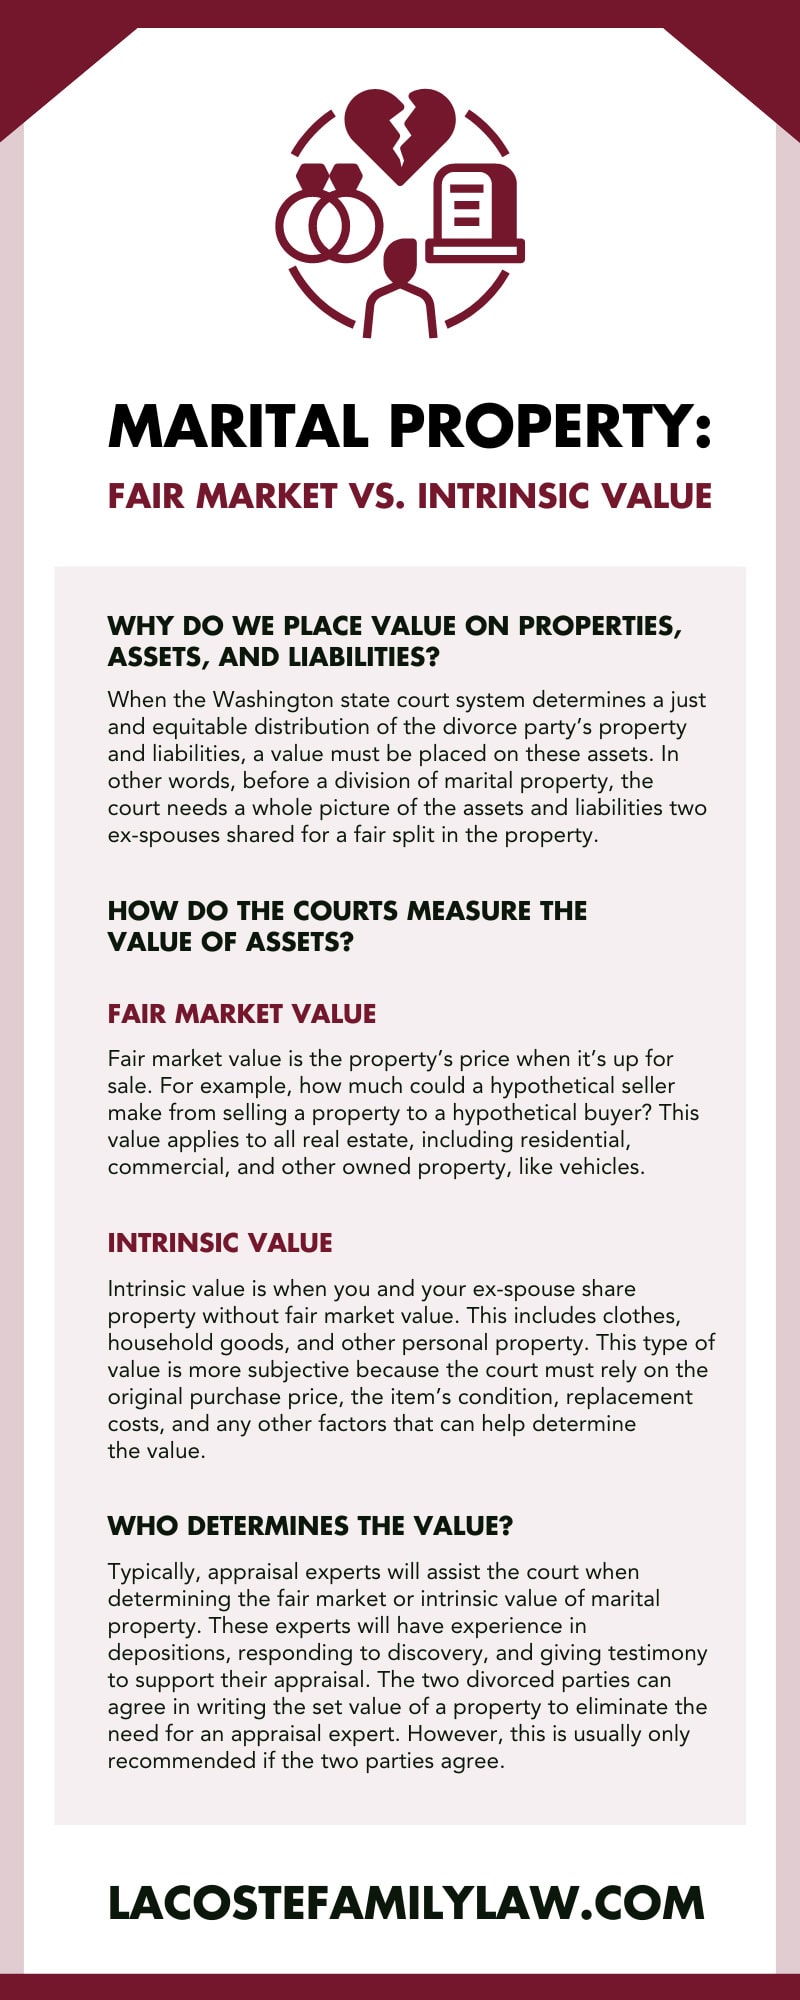 Marital Property: Fair Market vs. Intrinsic Value